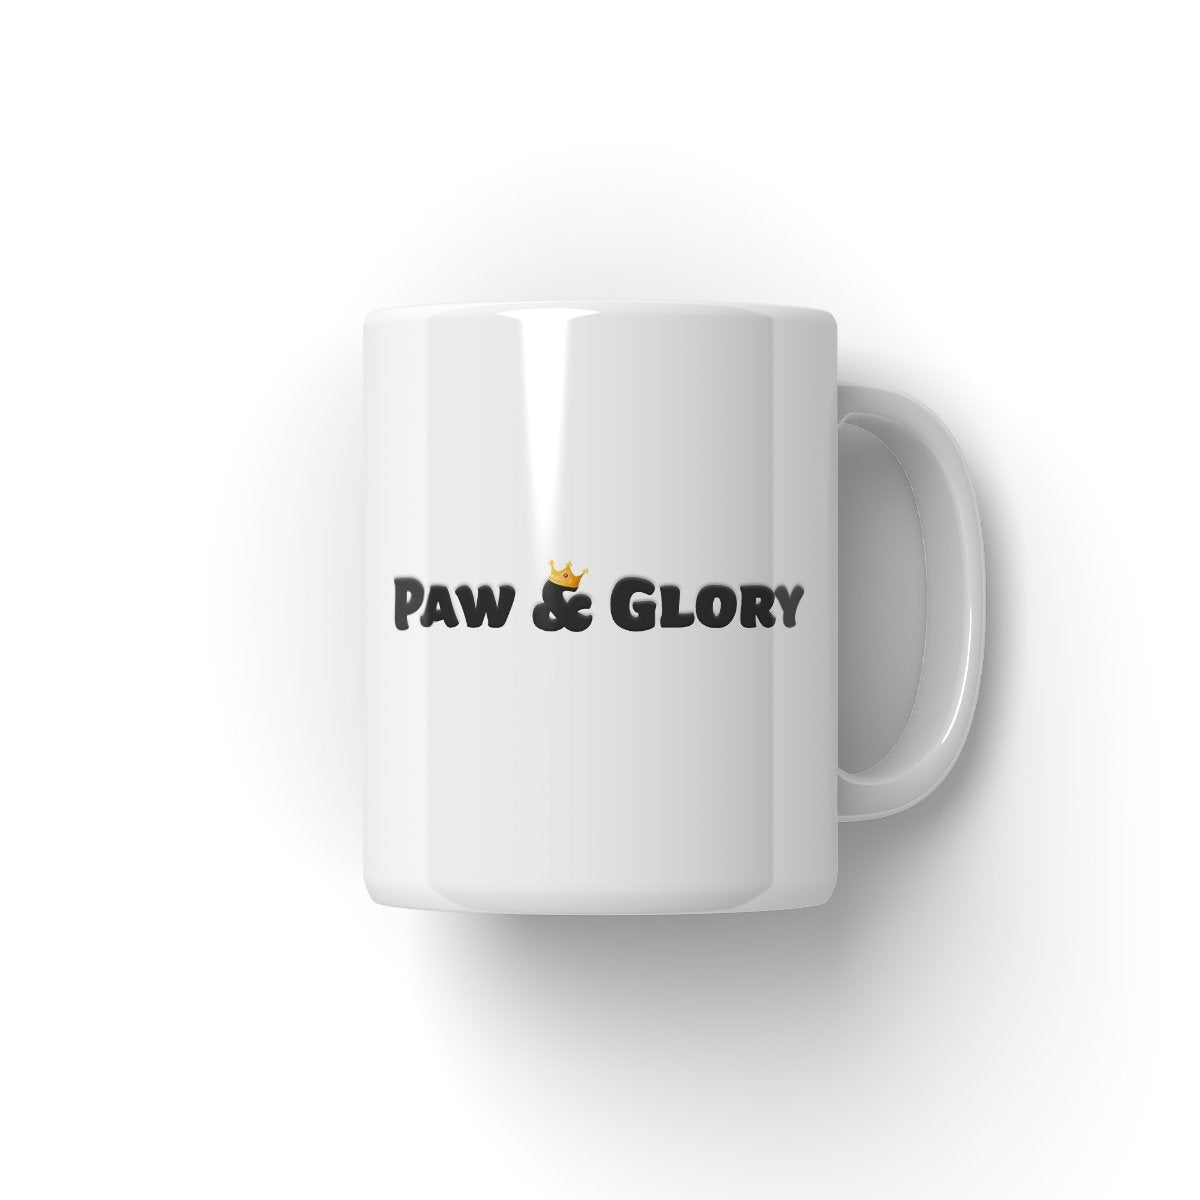 Muttsburgh Steeler Paw & Glory, paw and glory, personalized mugs with dogs, personalised dog mug, pet mug, personalized dog coffee mug, pet art mug, personalized dog mug, Pet Portraits Mug